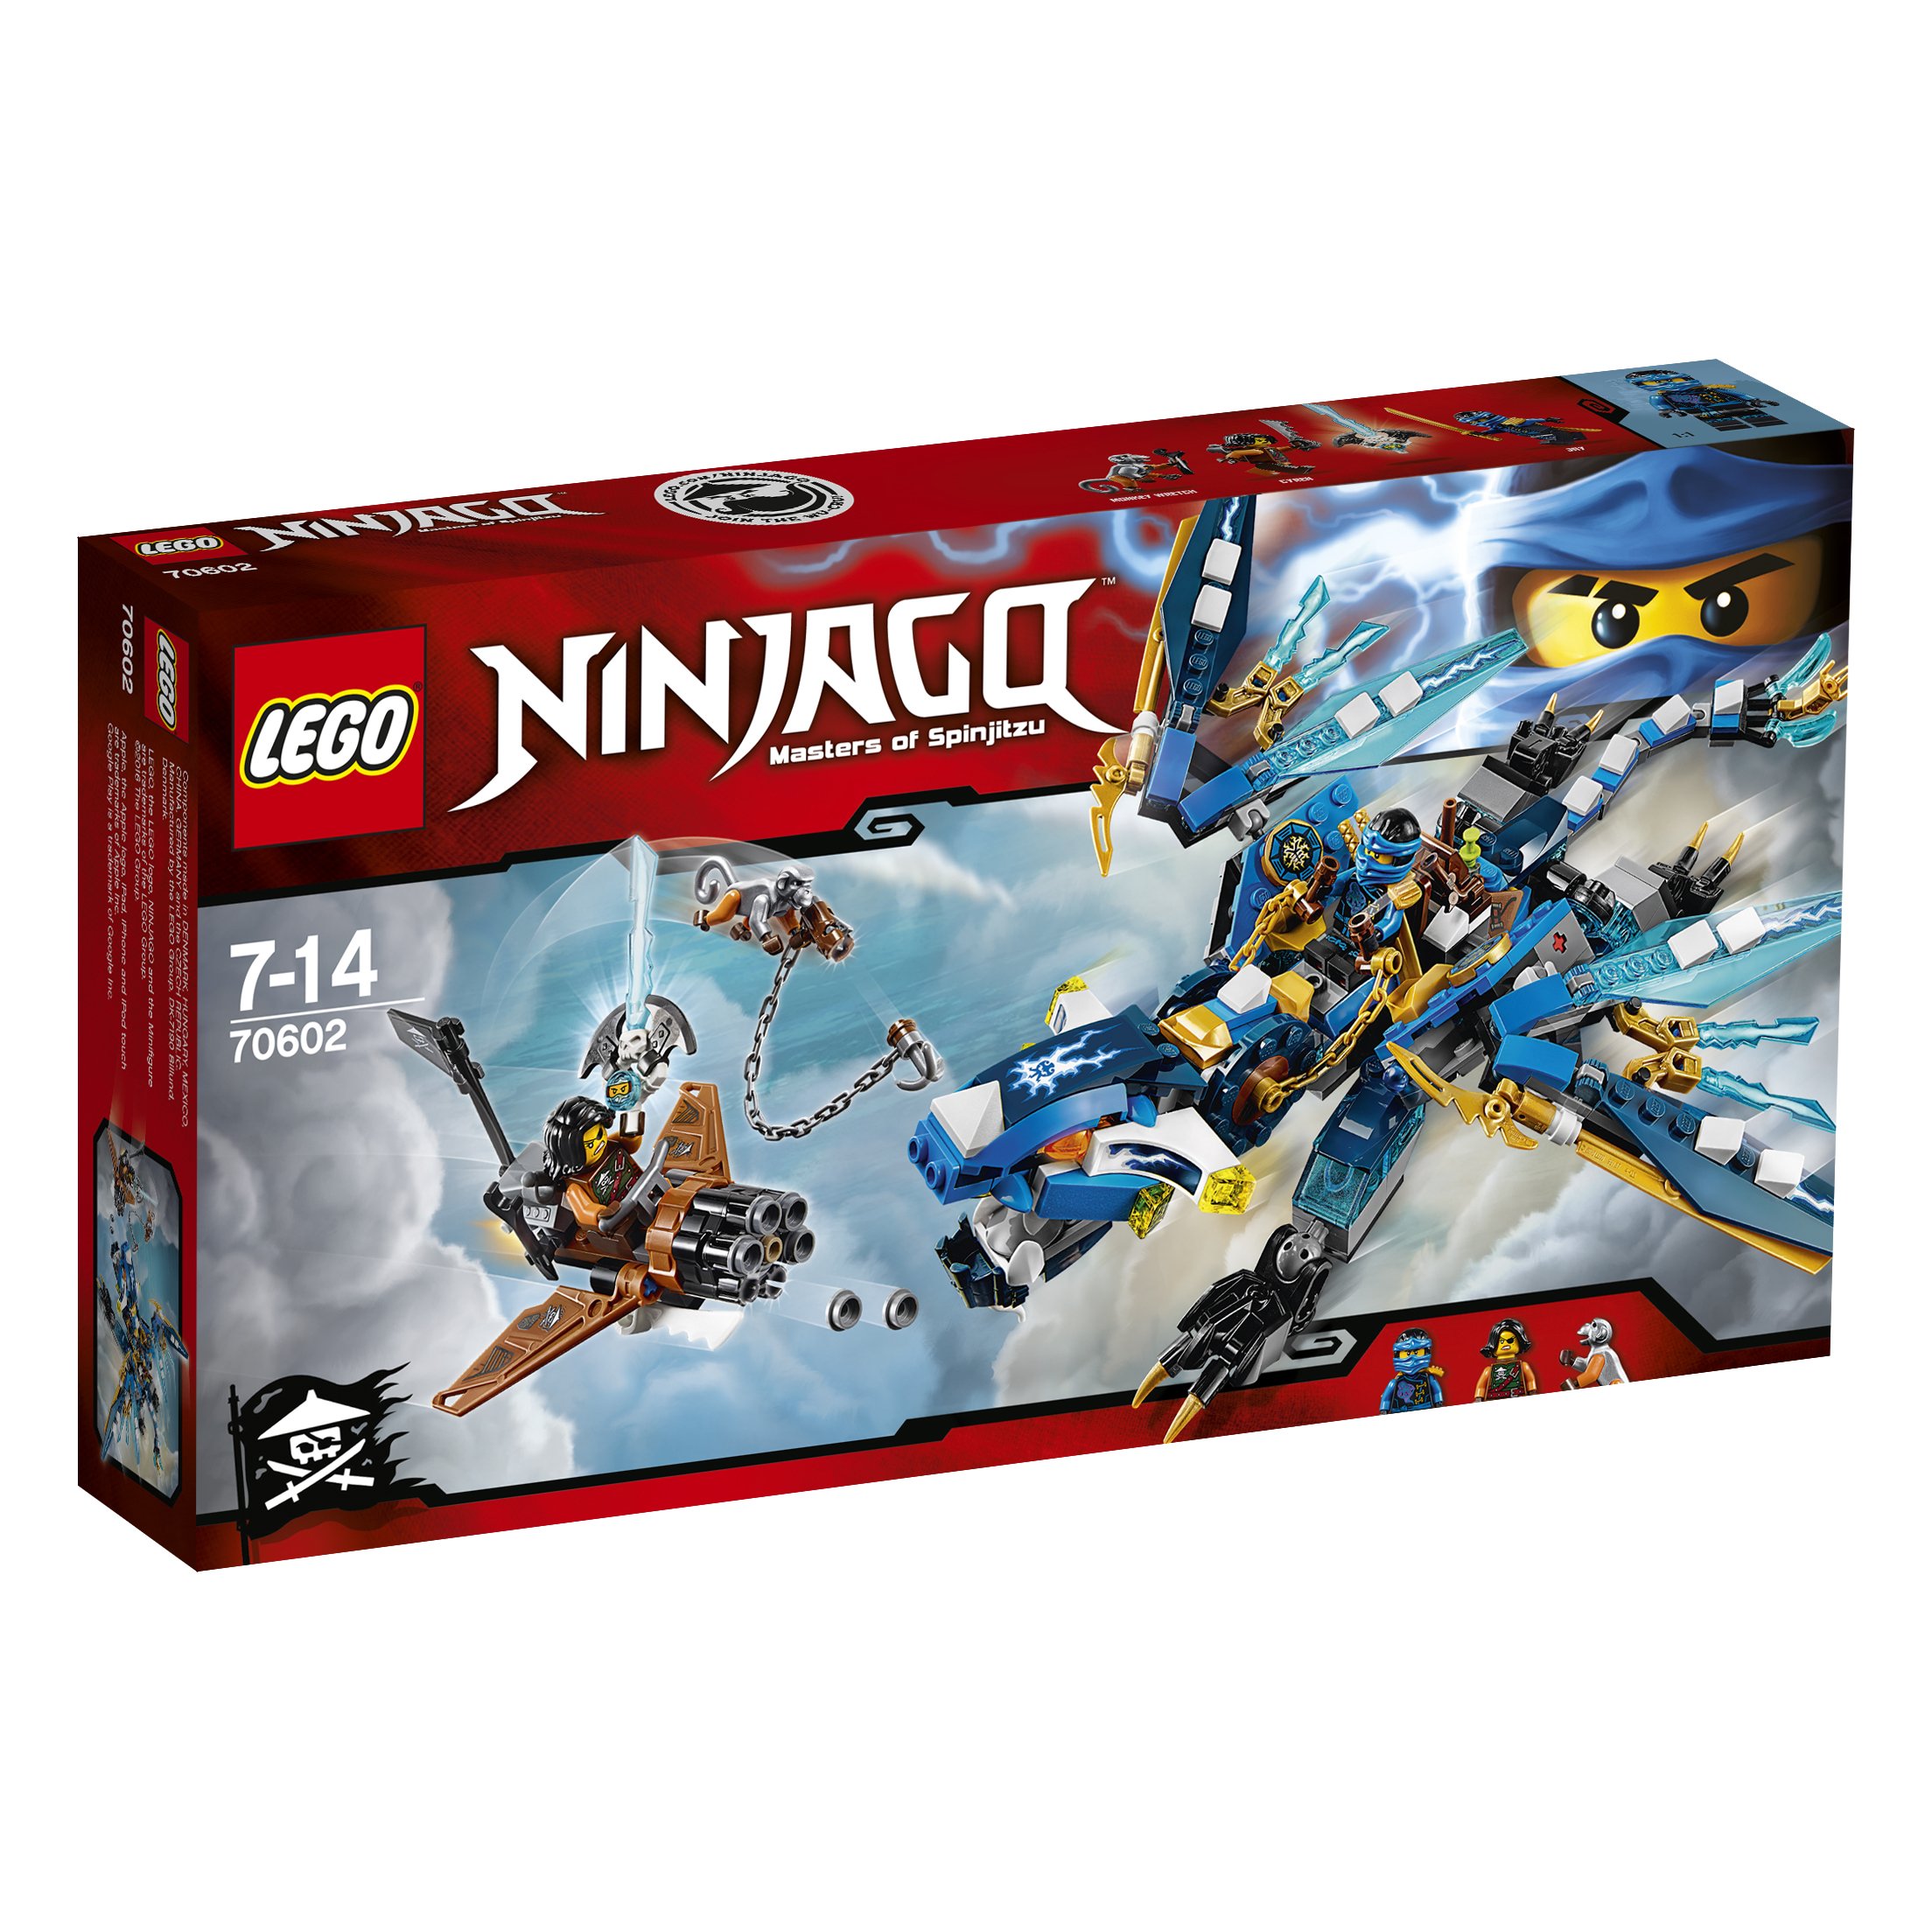 Lego Ninjago Jays Elemental Dragon Mixed